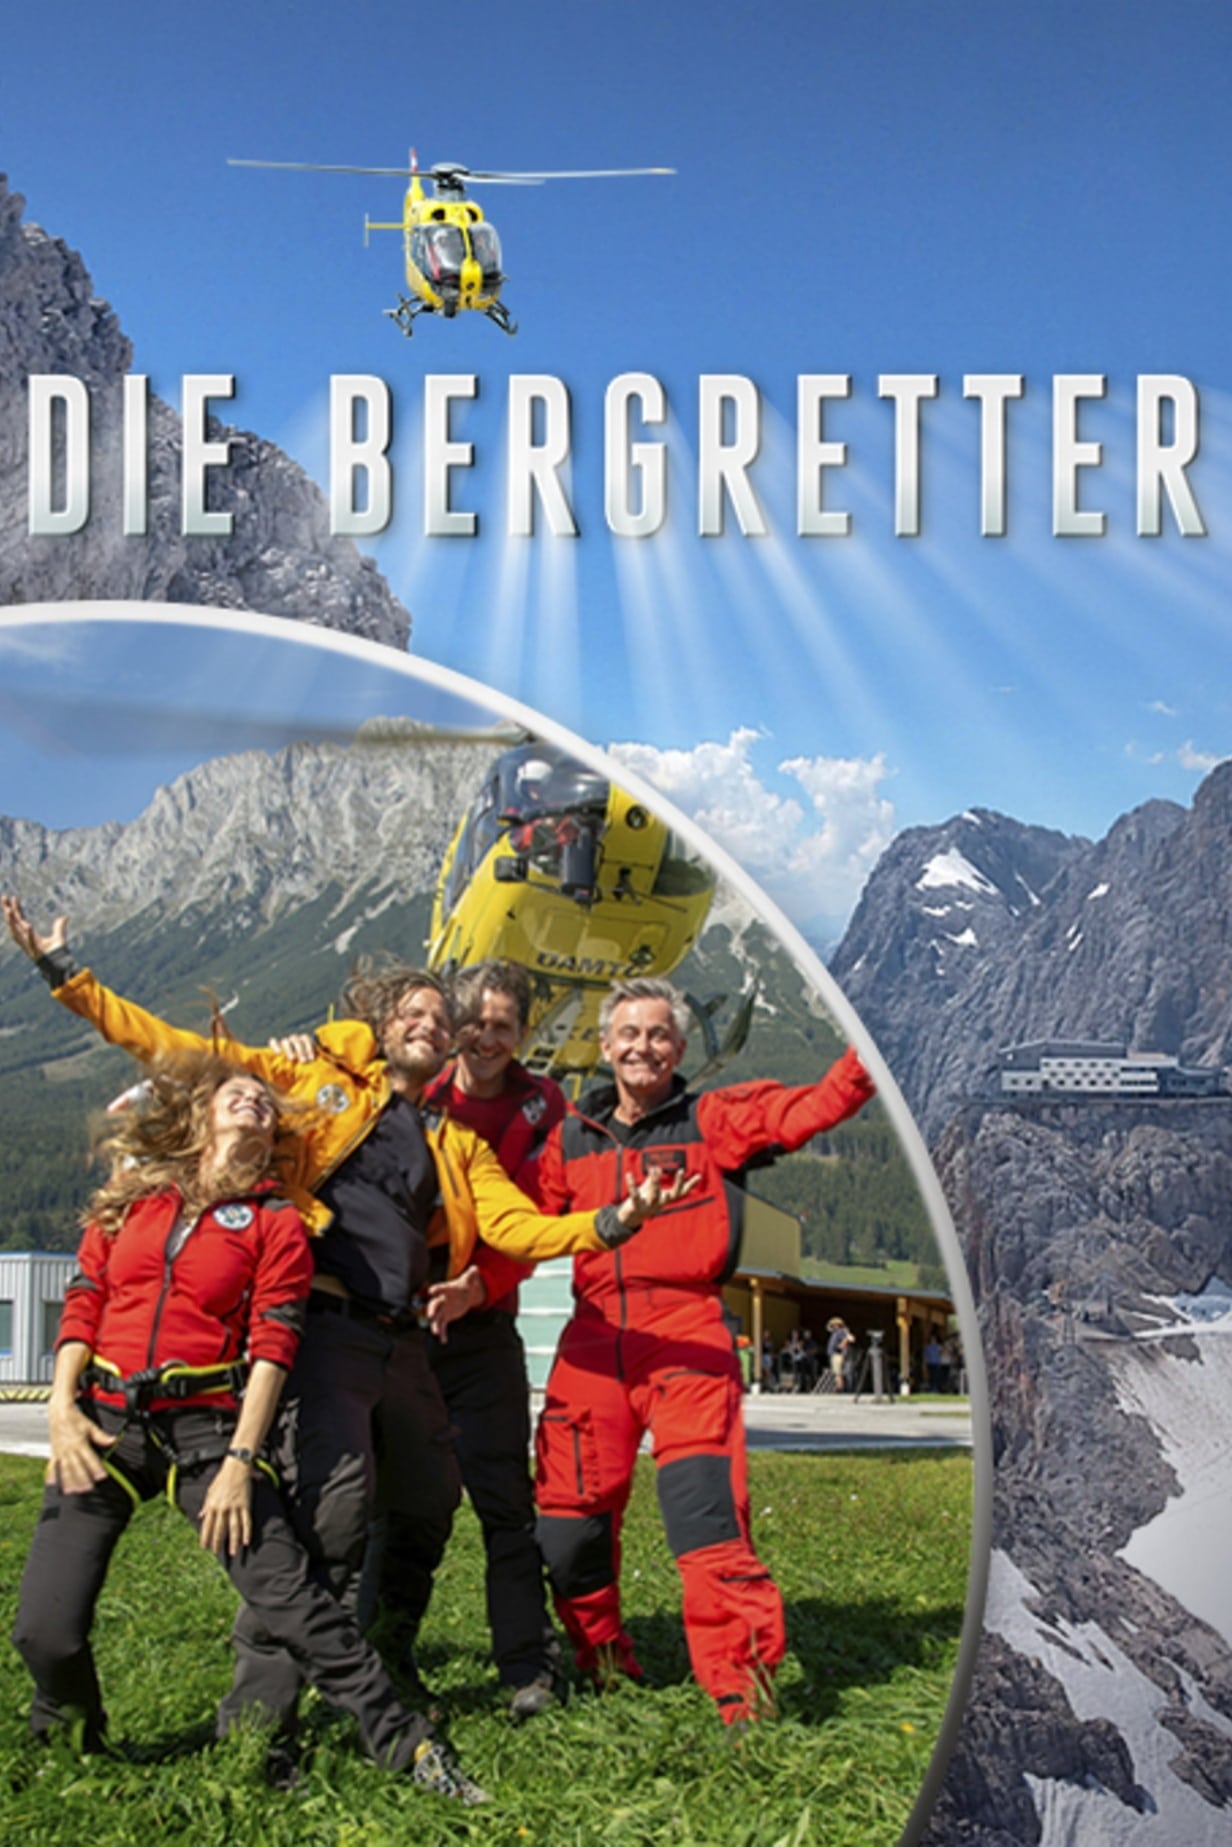 Caratula de Die Bergretter (Rescate en los Alpes) 